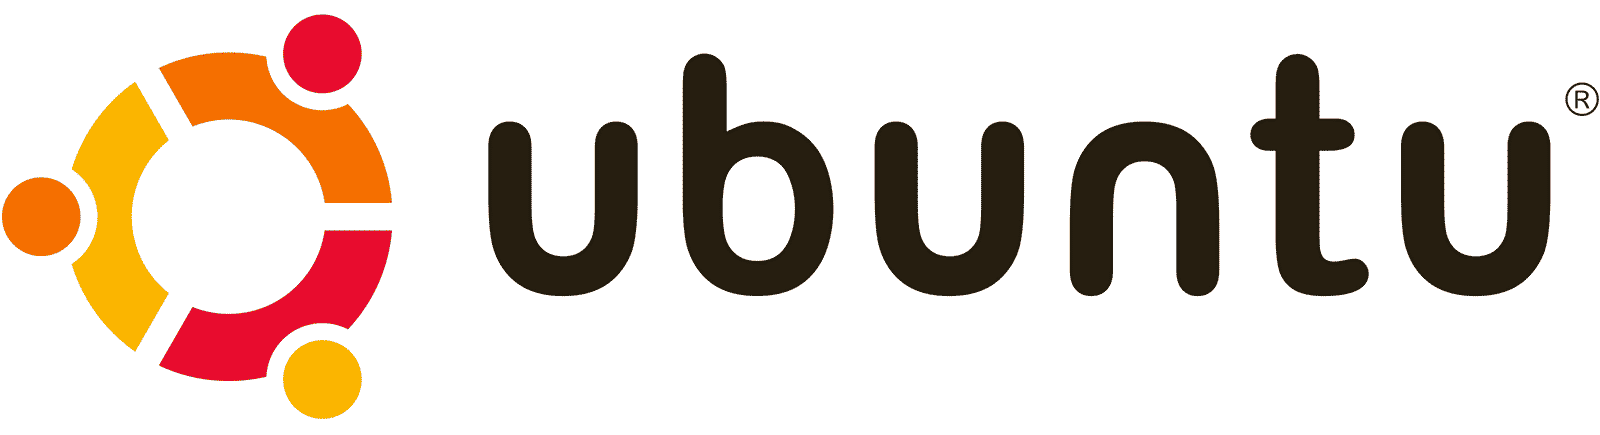 Logo de Ubuntu Linux